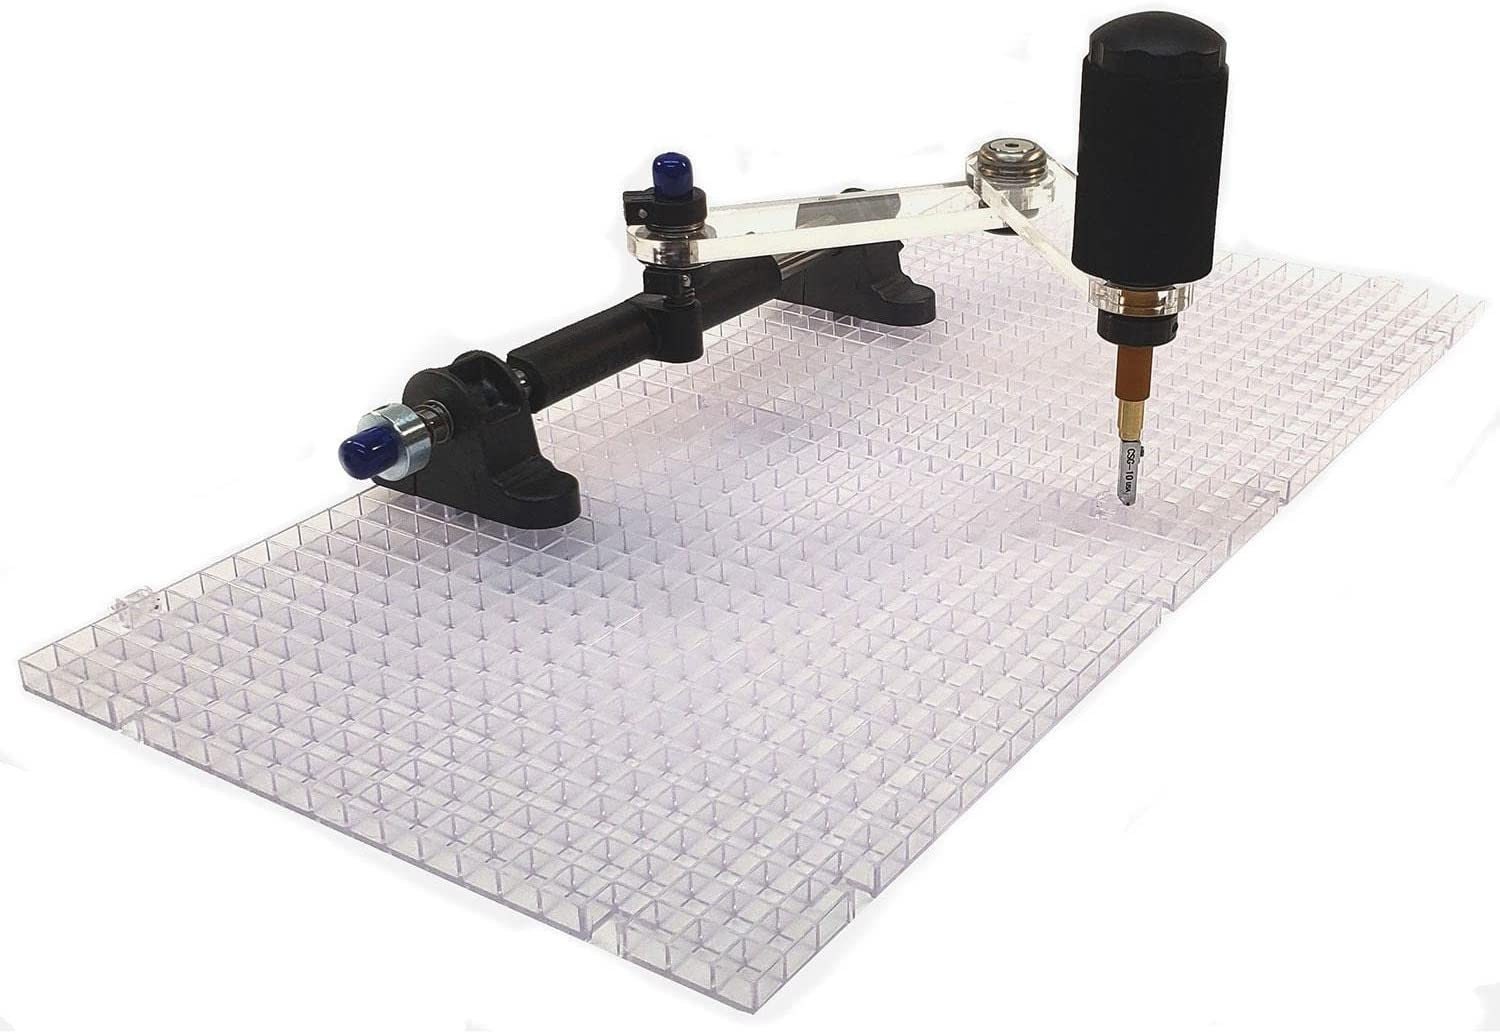 Tooltreaux Clear Craft Cutting Mat Art Supplies Hobby Tools, 3 Sizes 